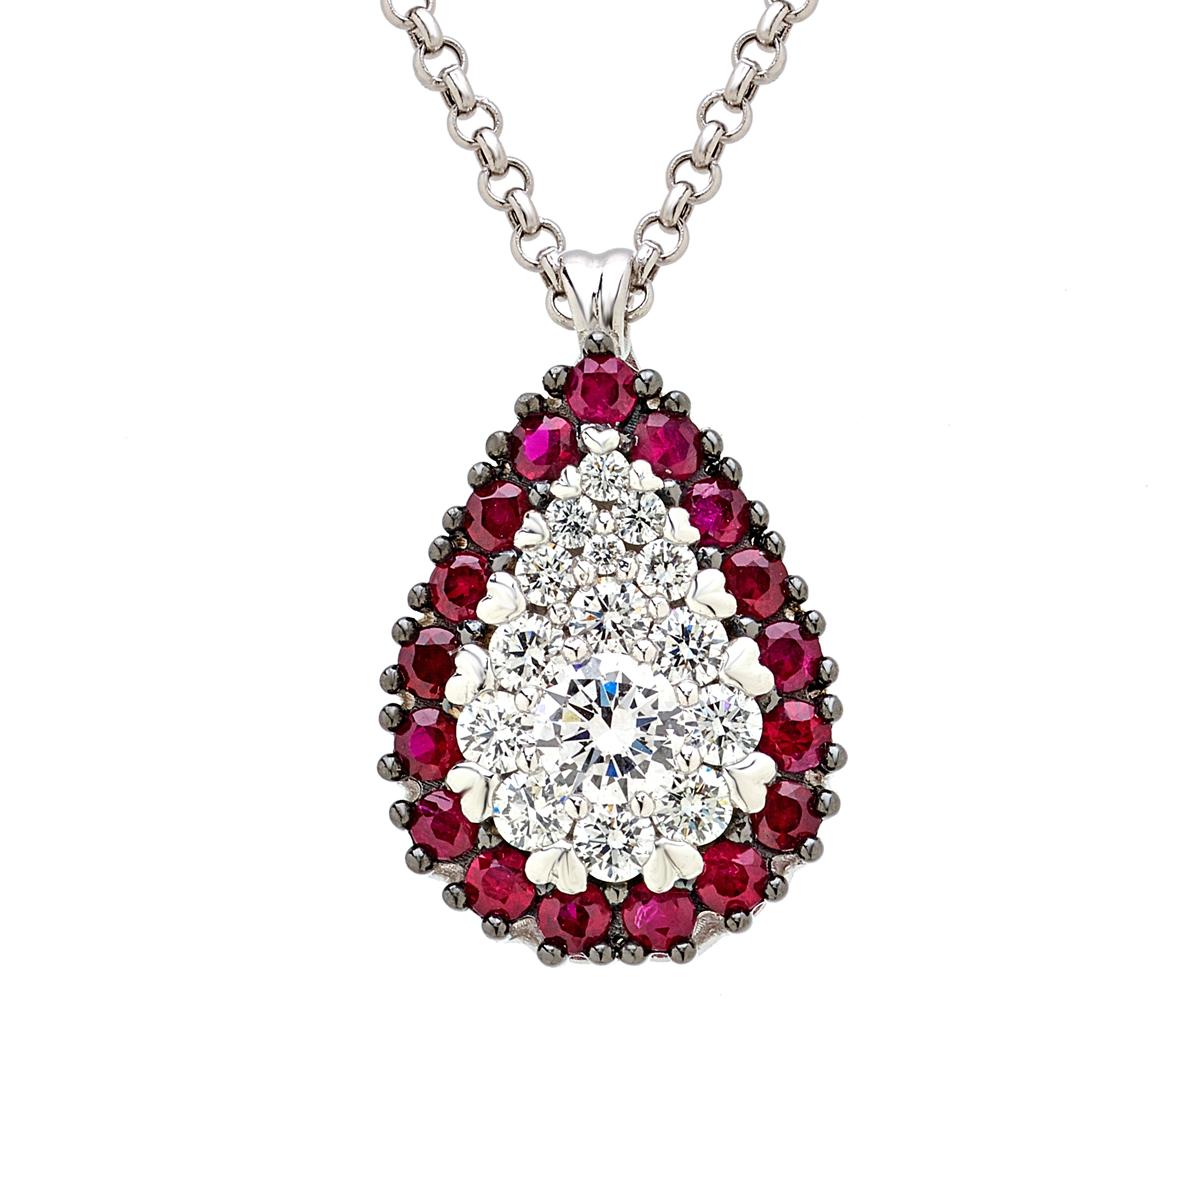 Necklace with Diamonds and Precious Stones